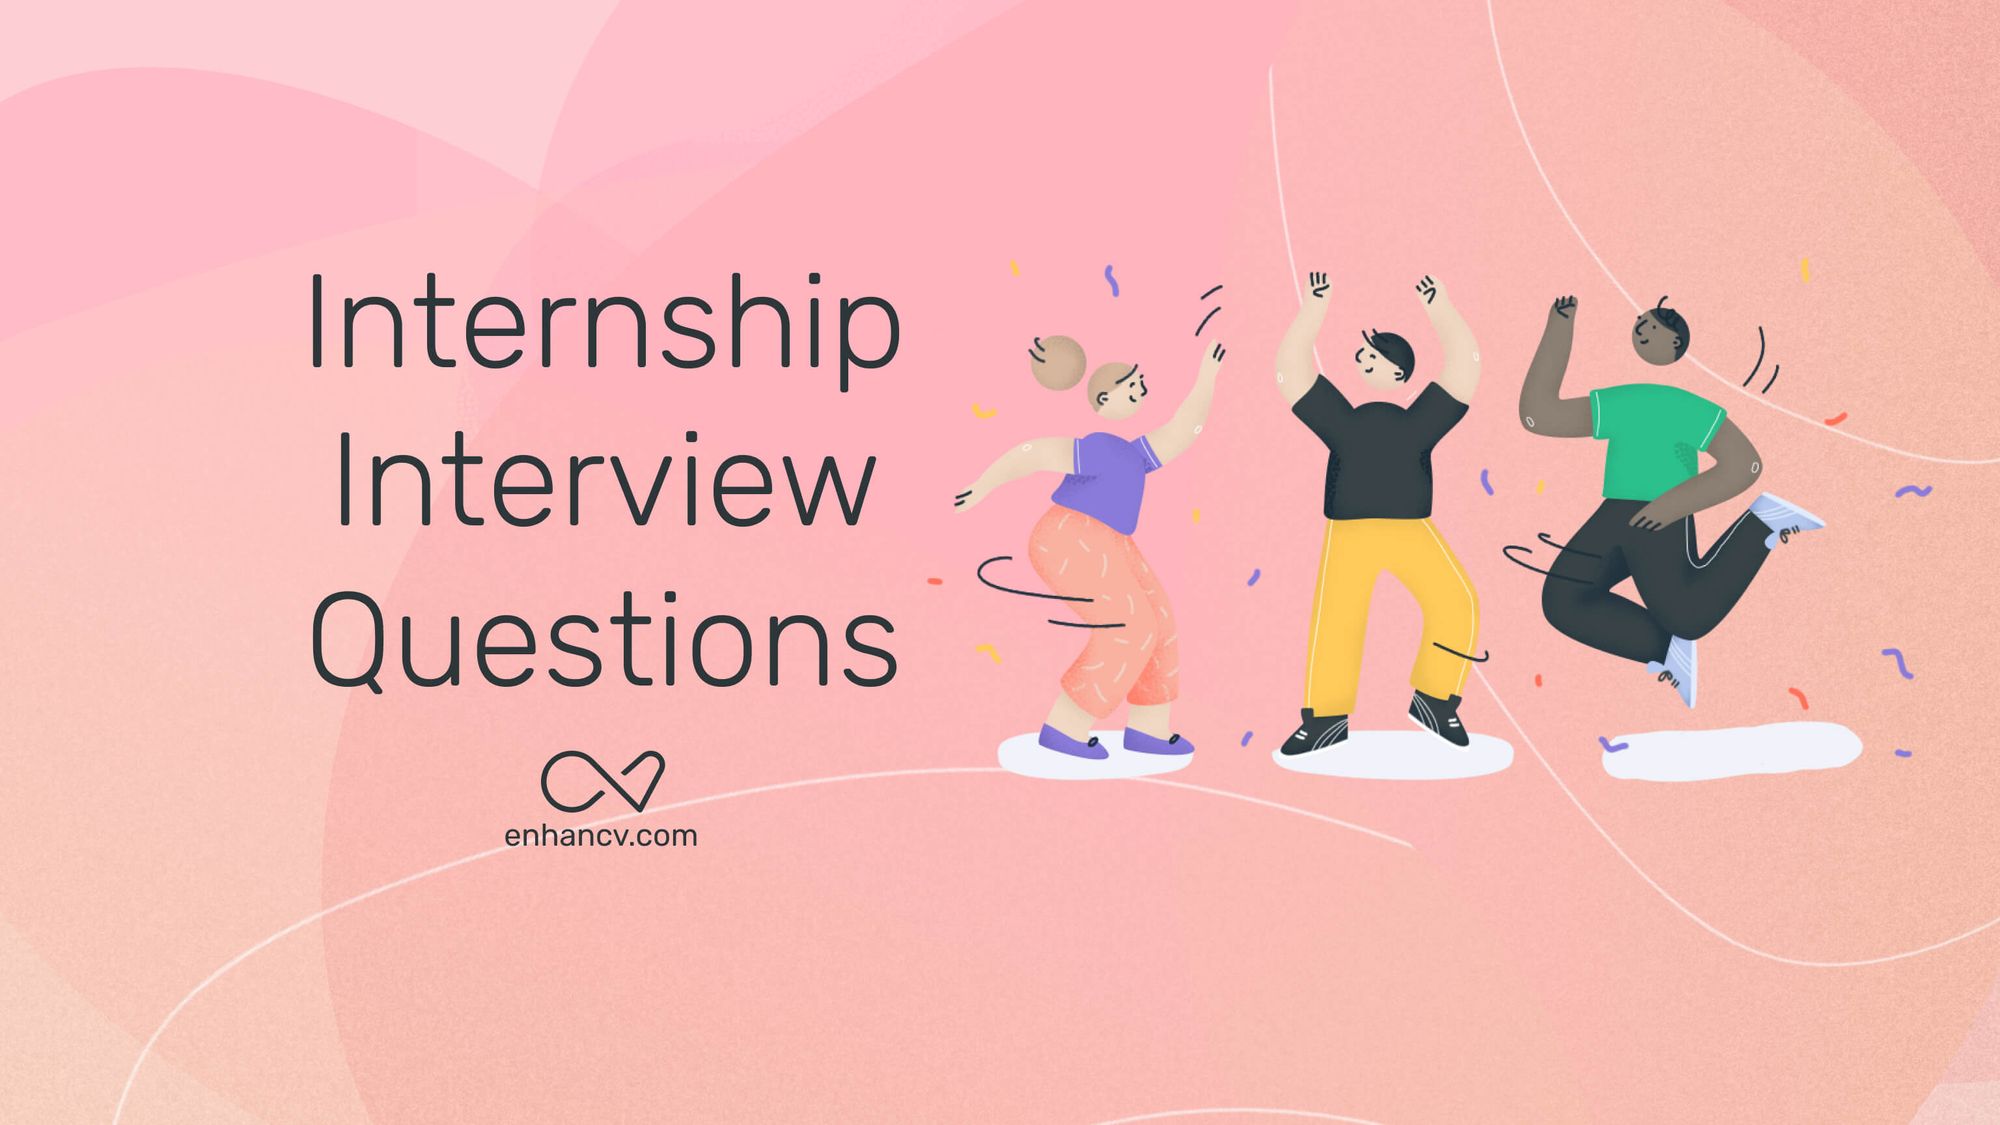 research and development internship interview questions